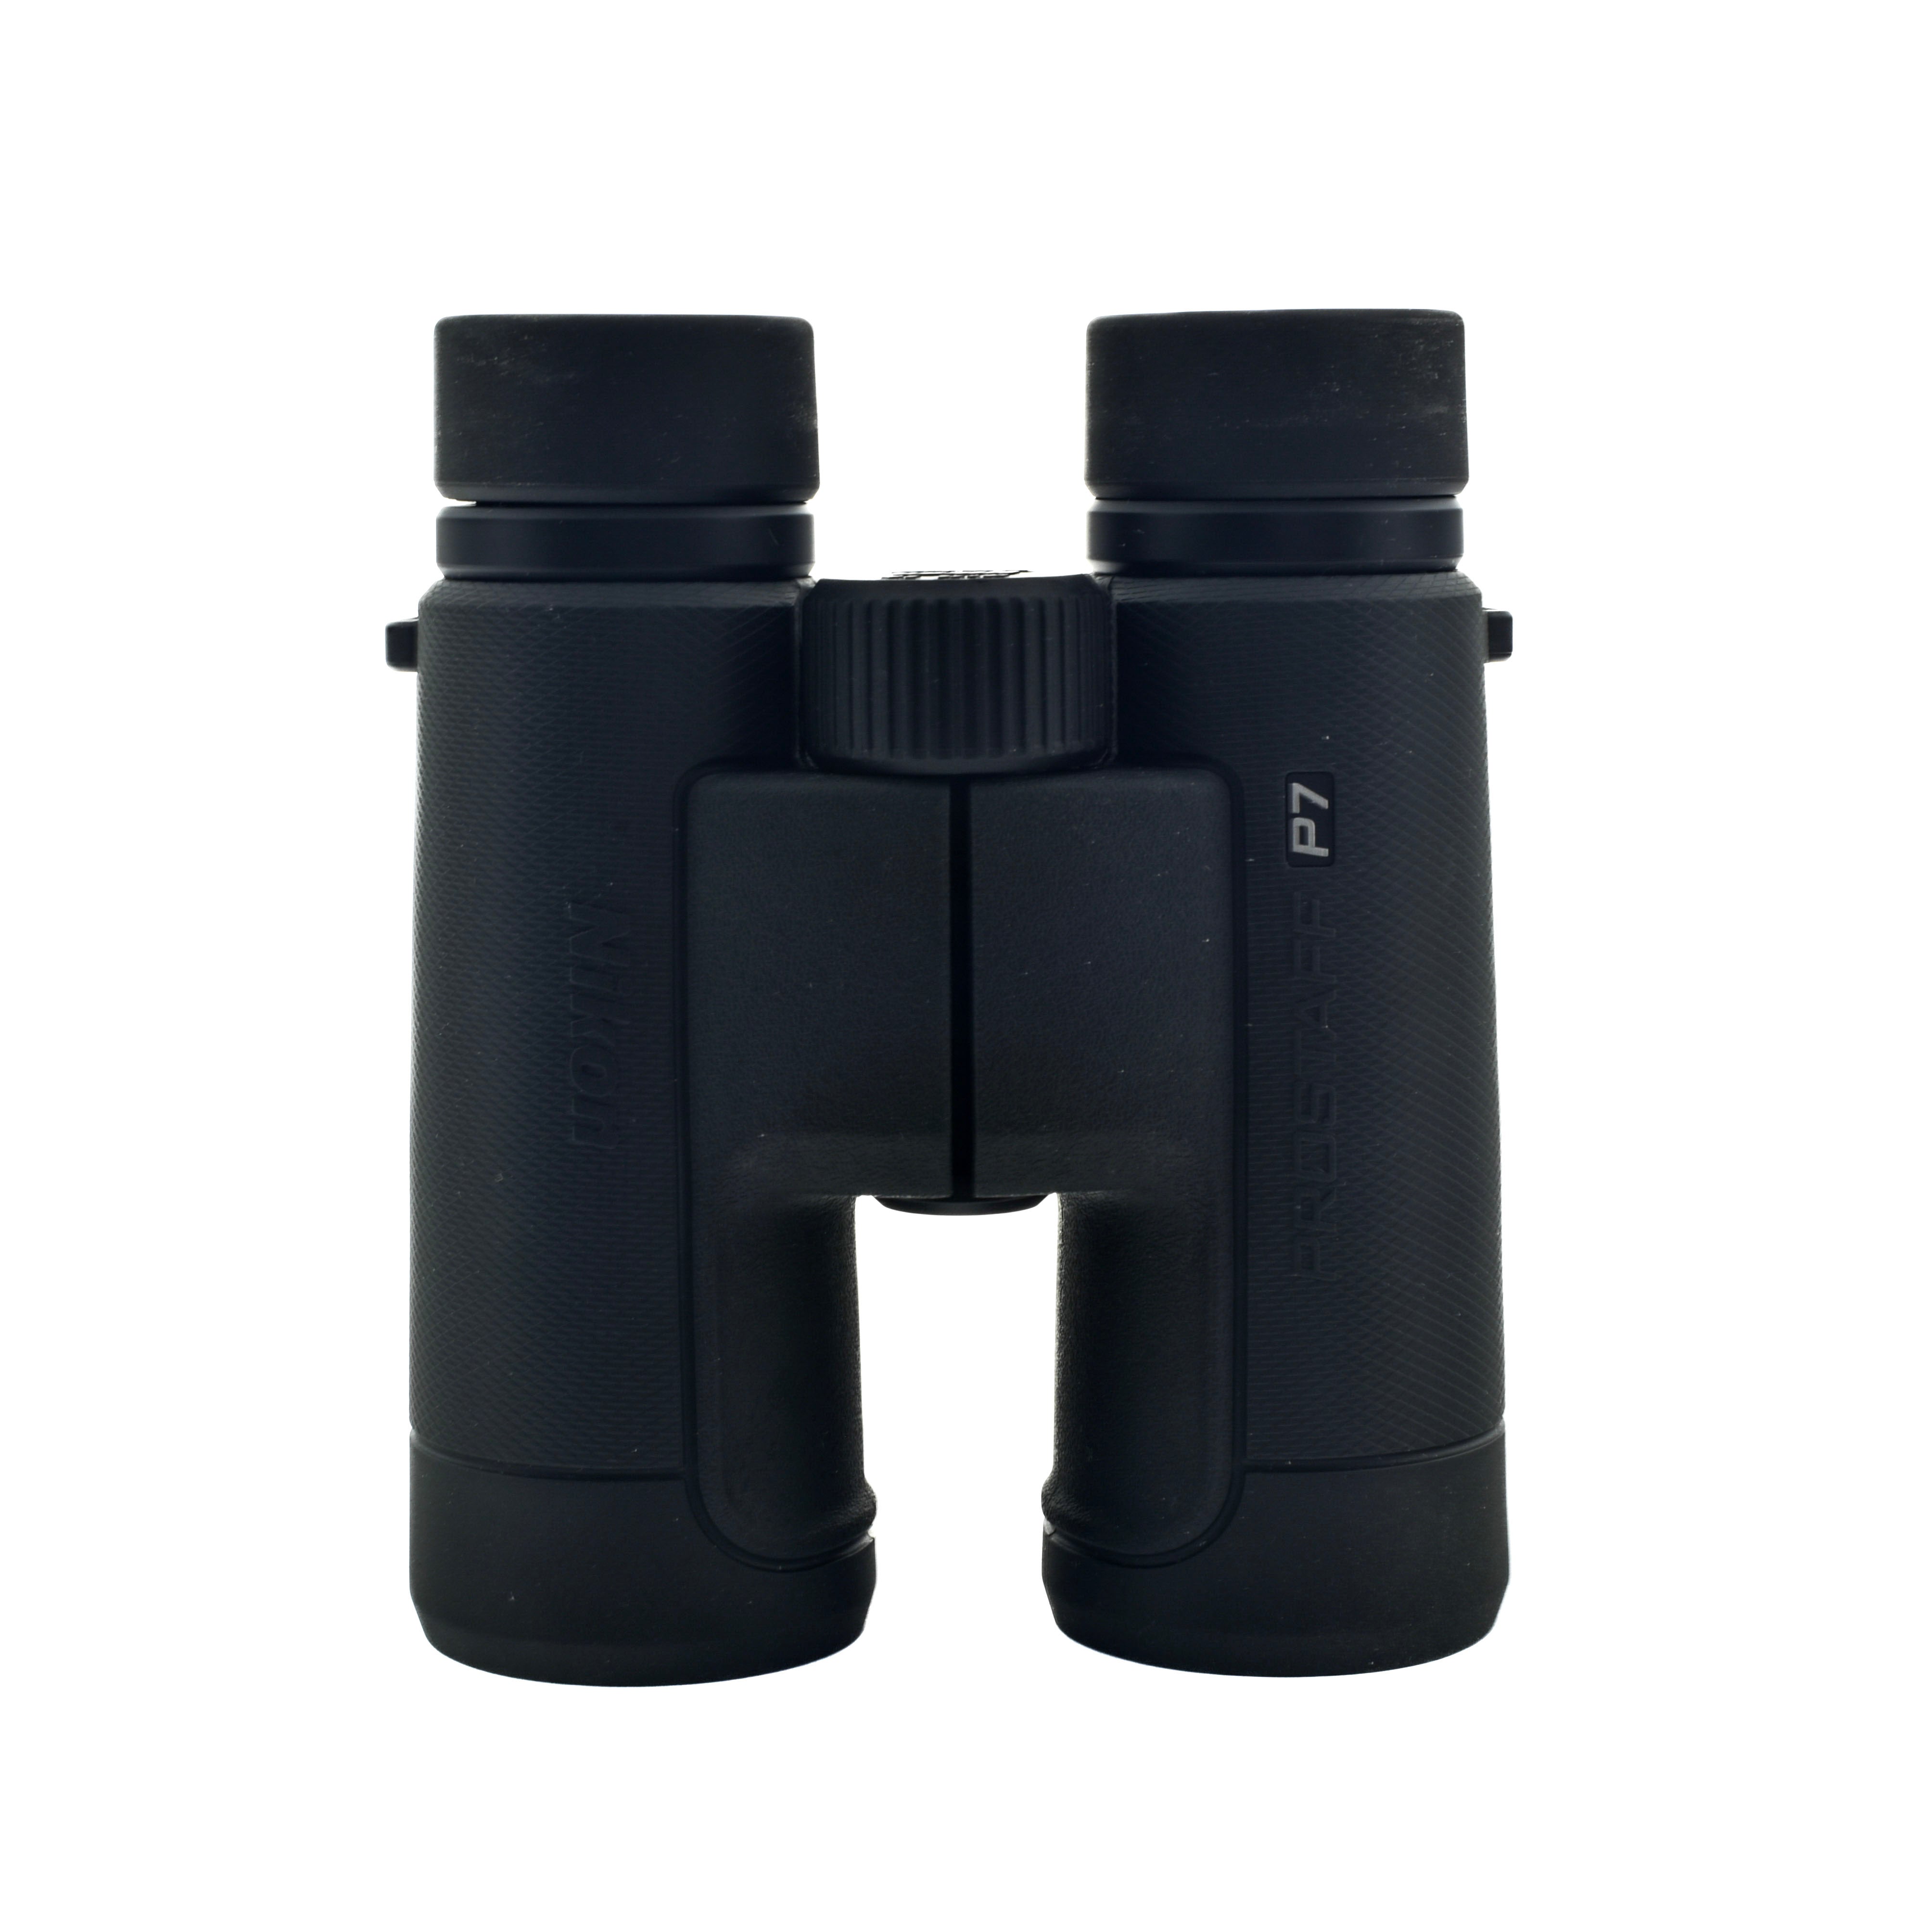 Nikon Prostaff P7 10x42 WP Binoculars (Black)